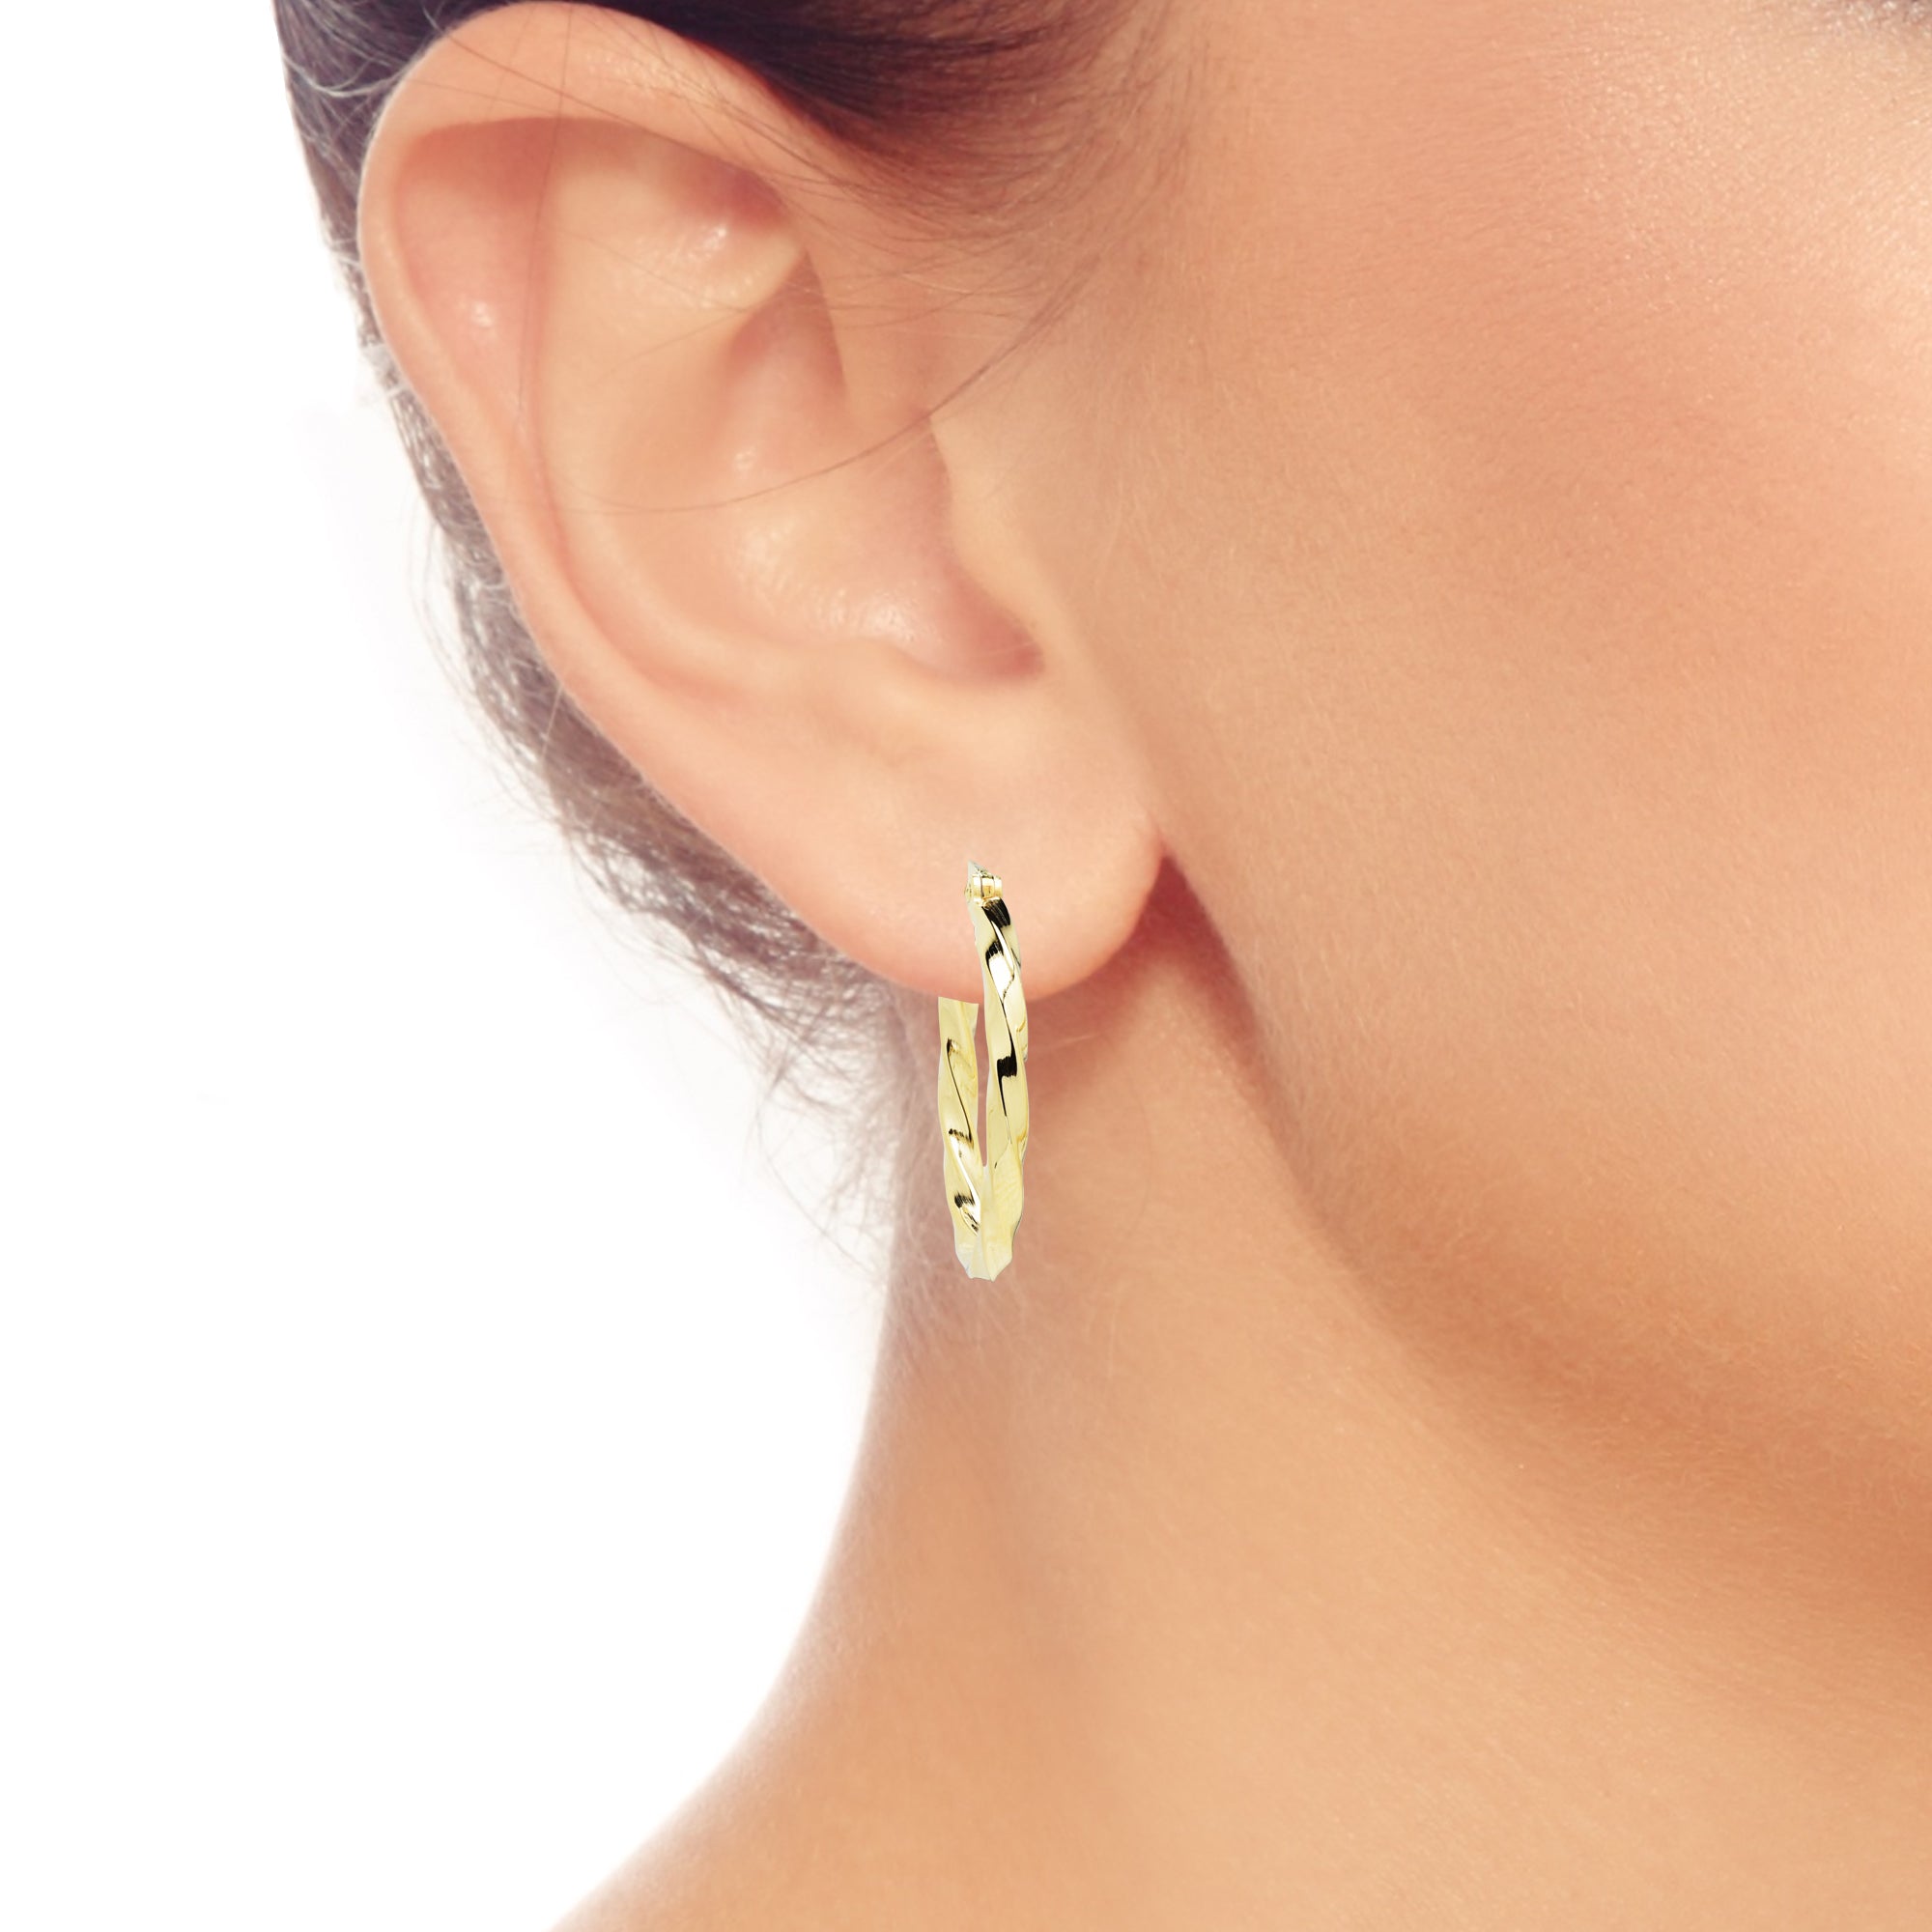 Twisted Hoop Earrings in 14kt Yellow Gold